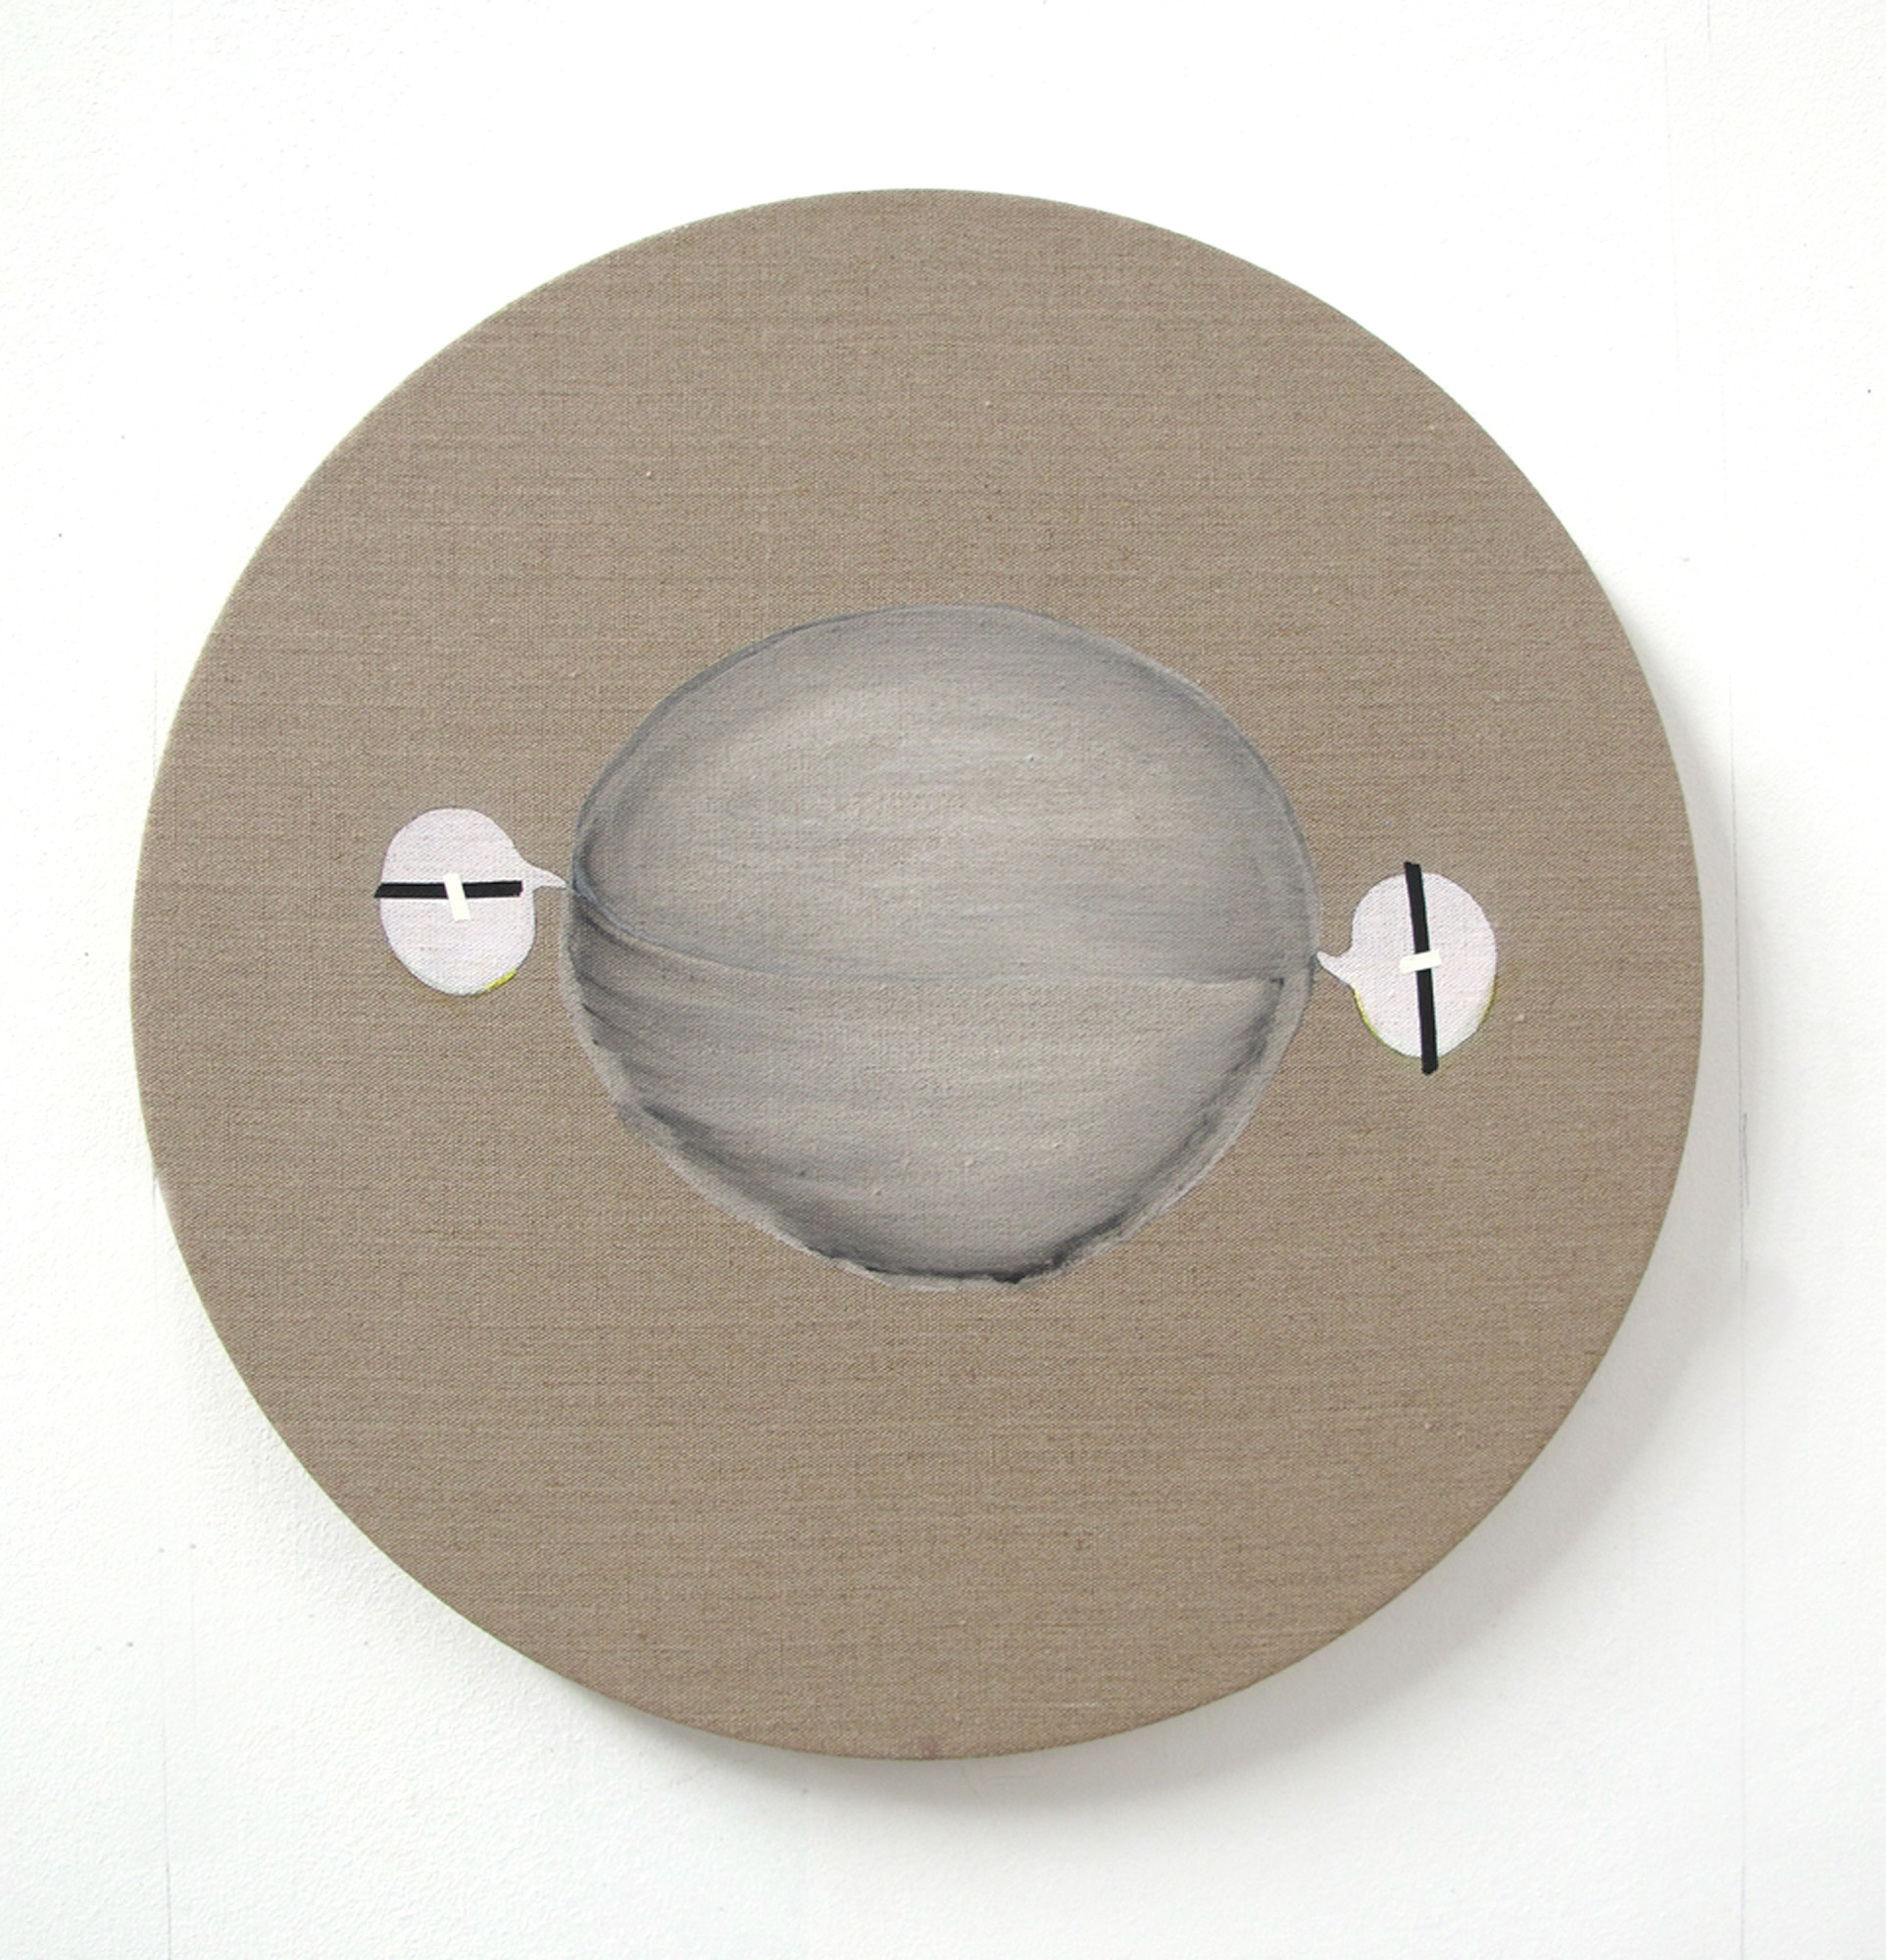 Burbuja Burbuja, 2012, mixed media on canvas, 60 cm. diameter